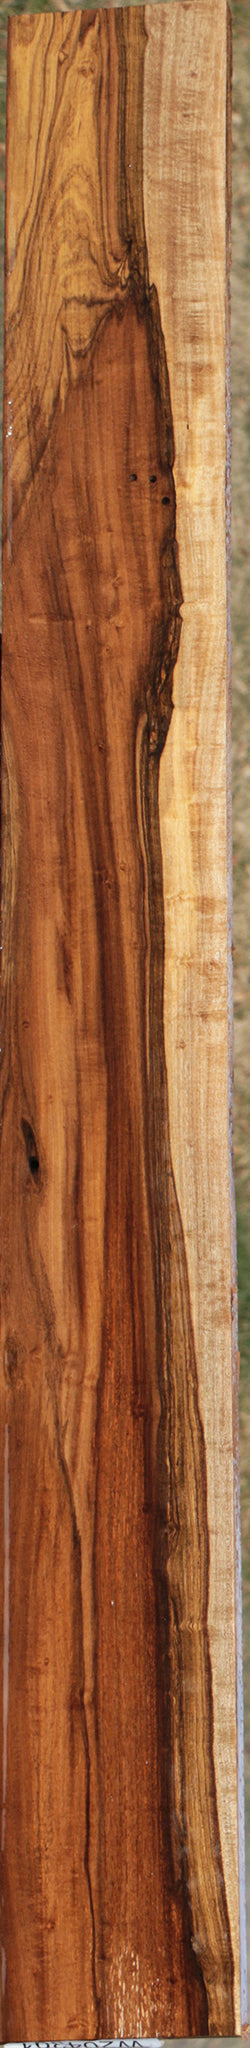 Extra Fancy Louro Preto Lumber